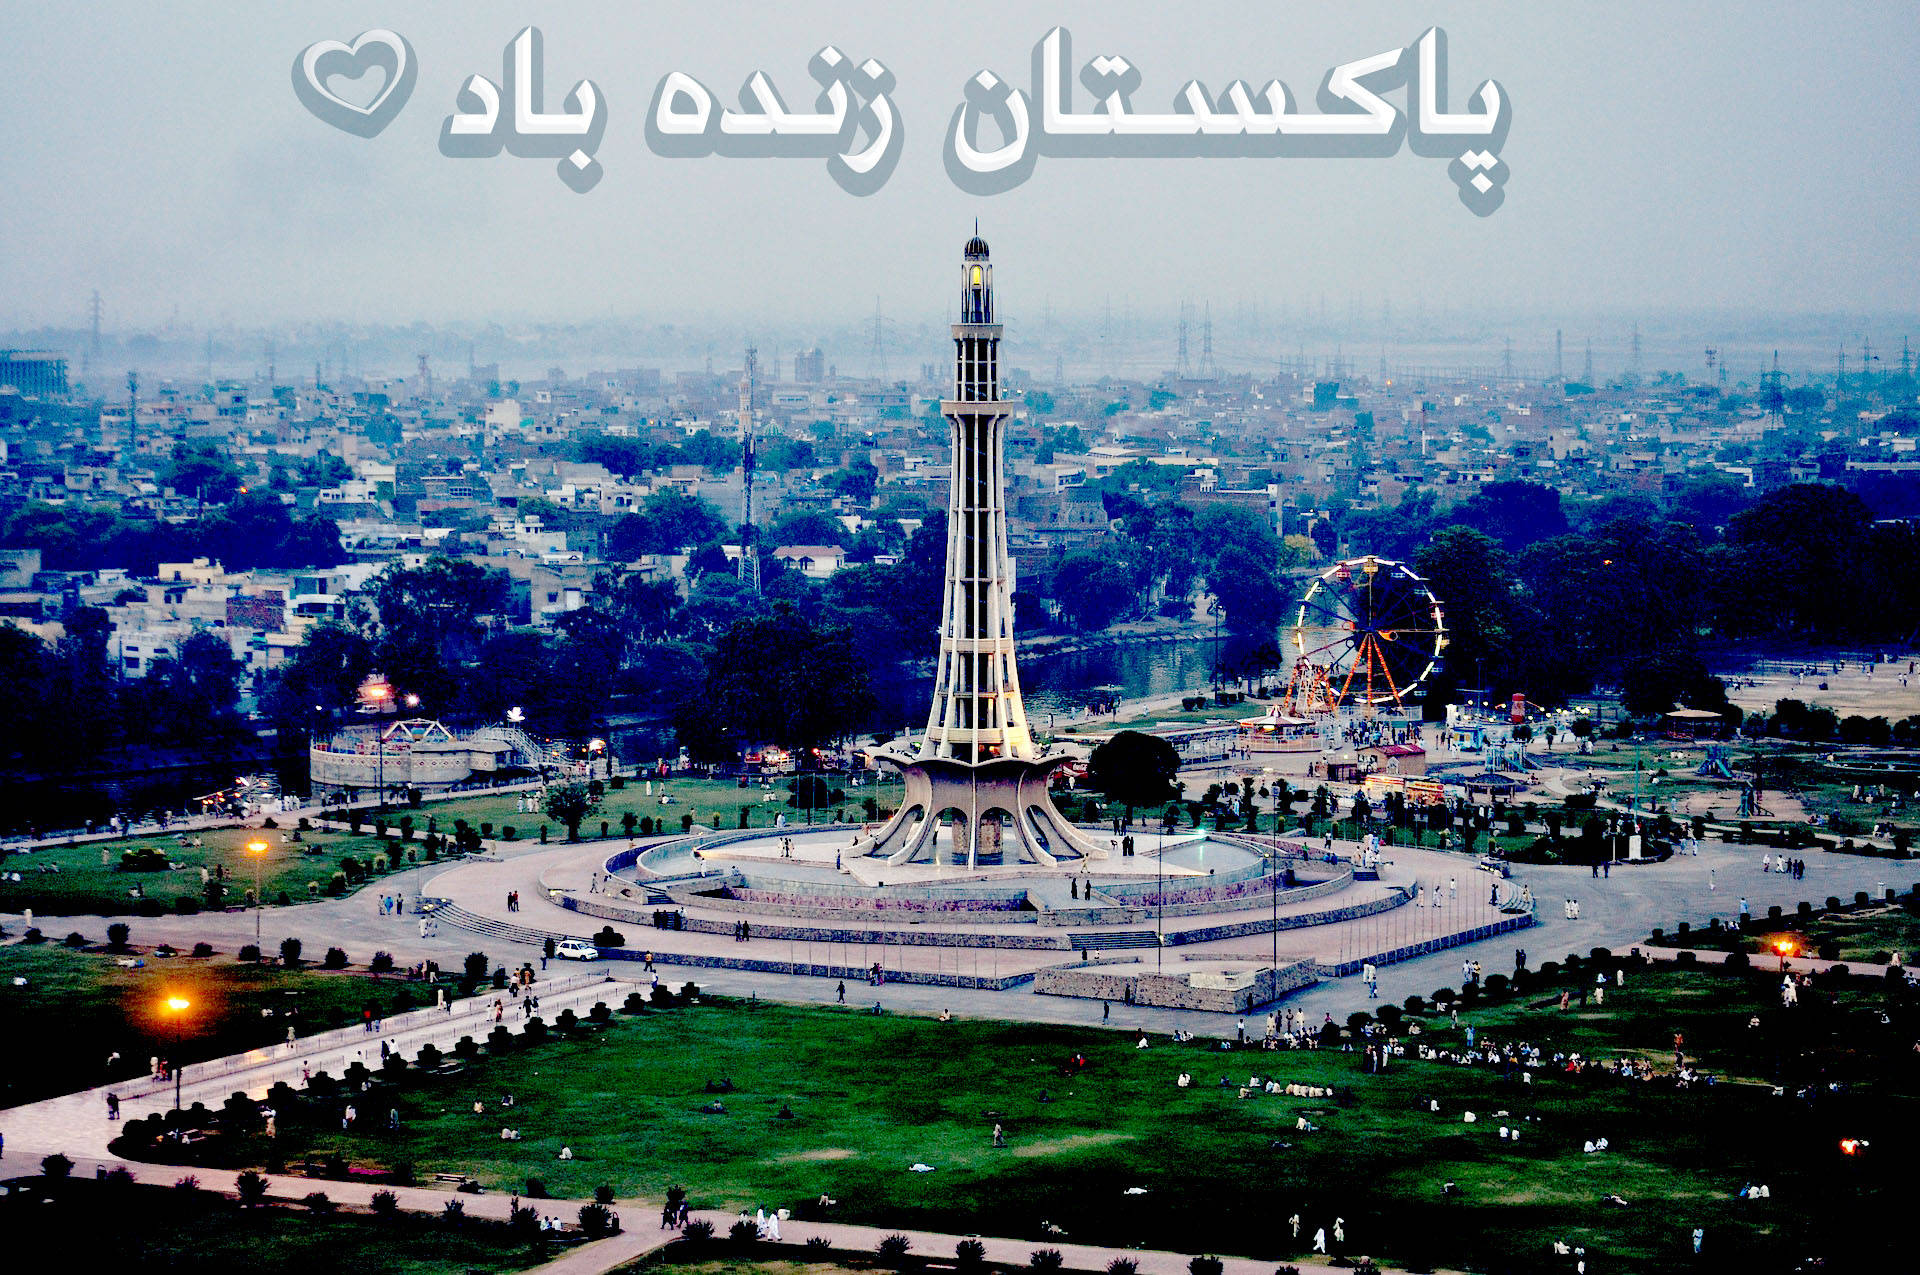 Minarde Pakistán Al Atardecer Fondo de pantalla